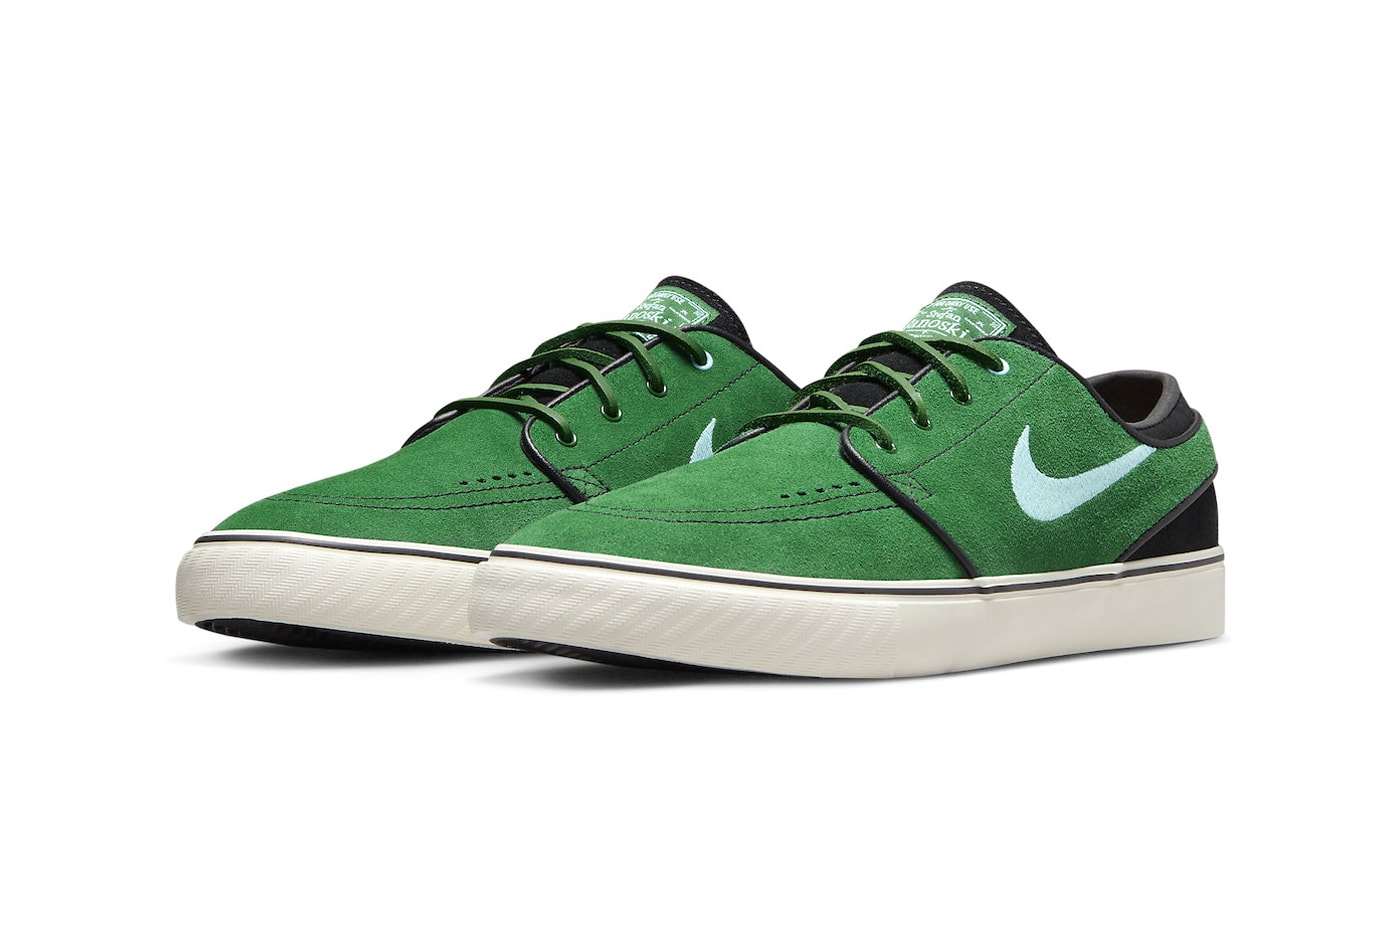 Nike SB Janoski OG+ Surfaces in "Going Green" DV5475-300 Gorge Green/Copa-Action Green-Bright Cactus-Enamel Green-Black skate shoes nike swosh low top